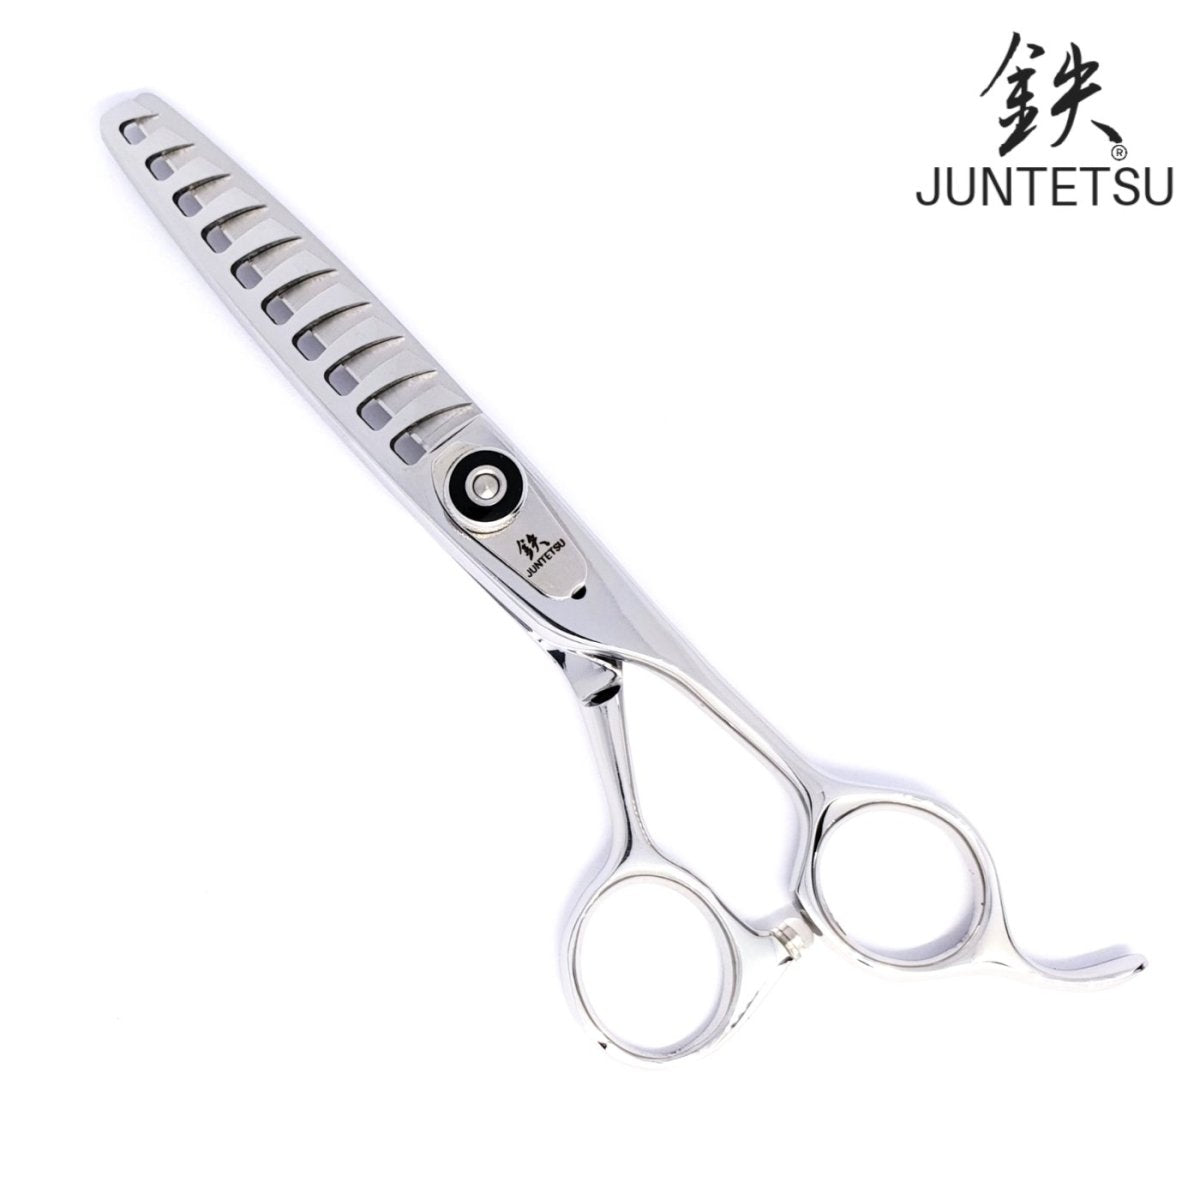 The best Juntetsu hair chomper thinning shear for professionals